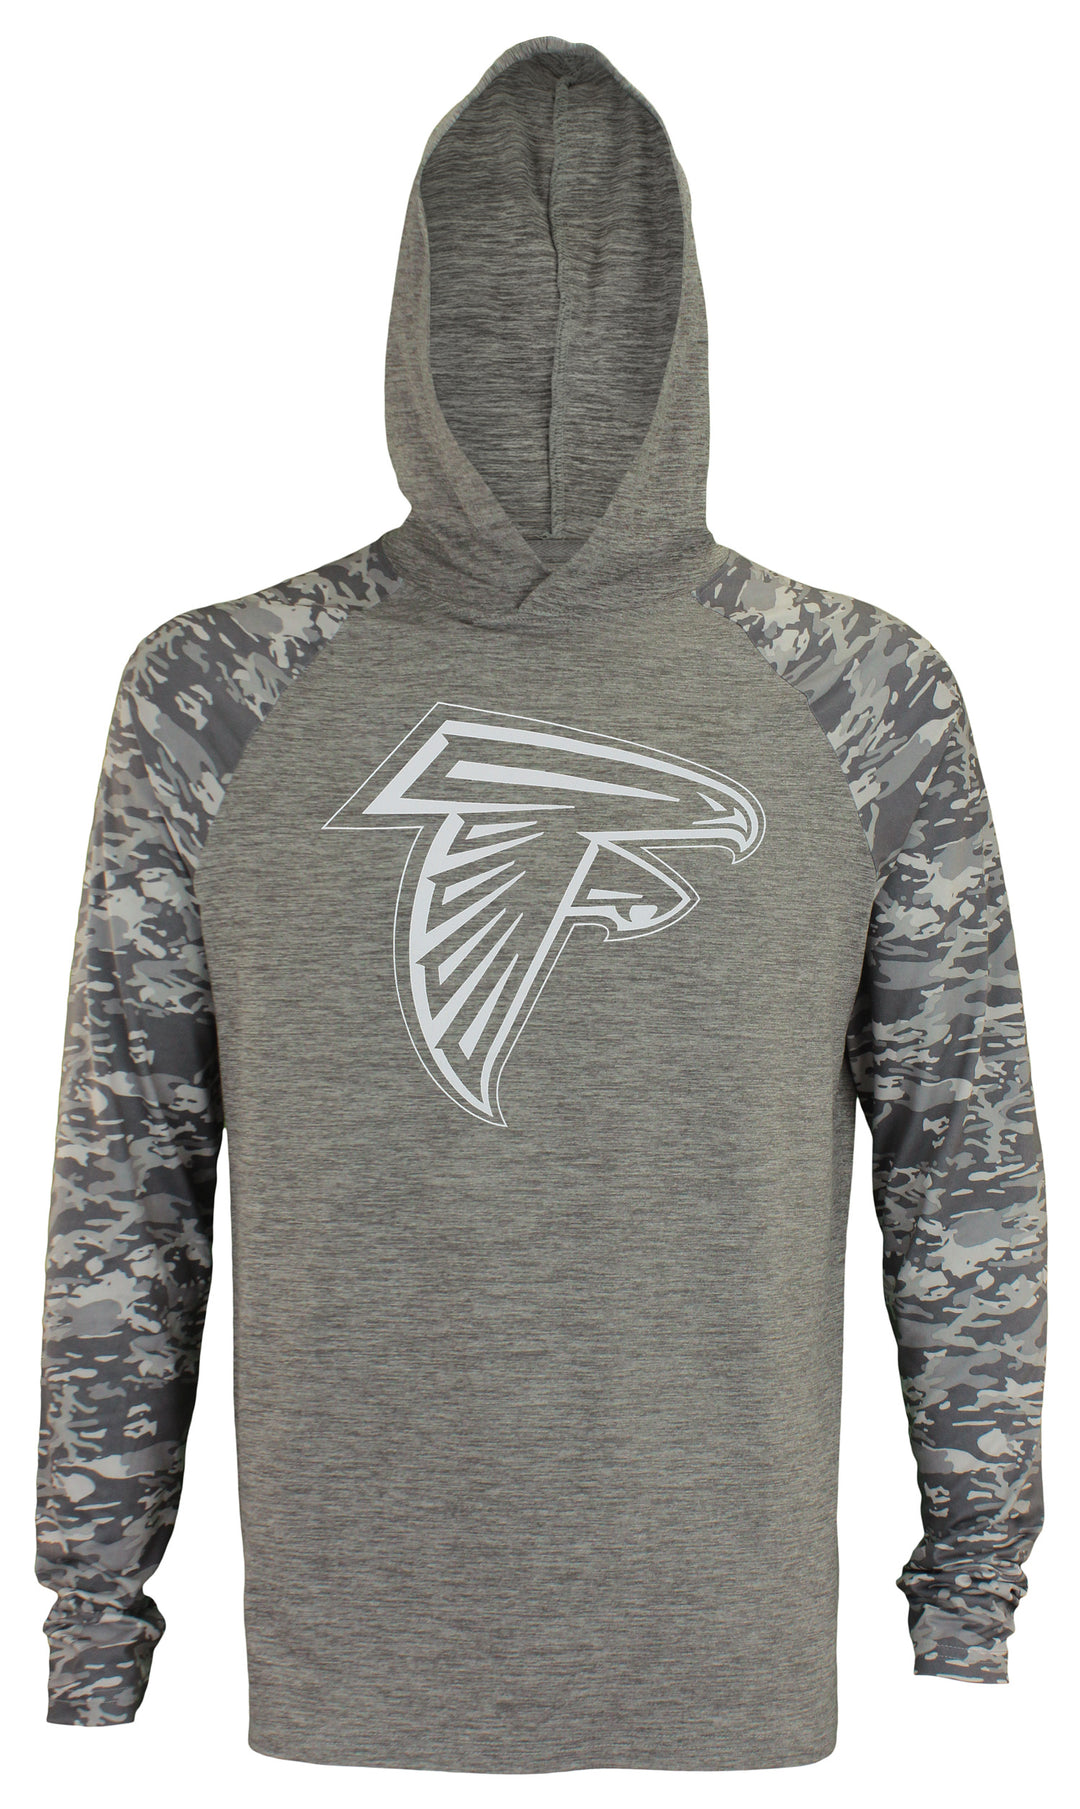 Zubaz NFL Men's Atlanta Falcons Camo L/S Space Dye Big Logo Hooded Shirt, Grey